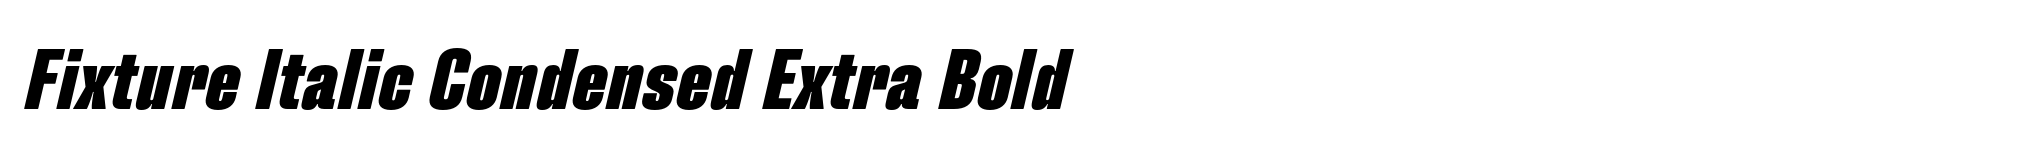 Fixture Italic Condensed Extra Bold image